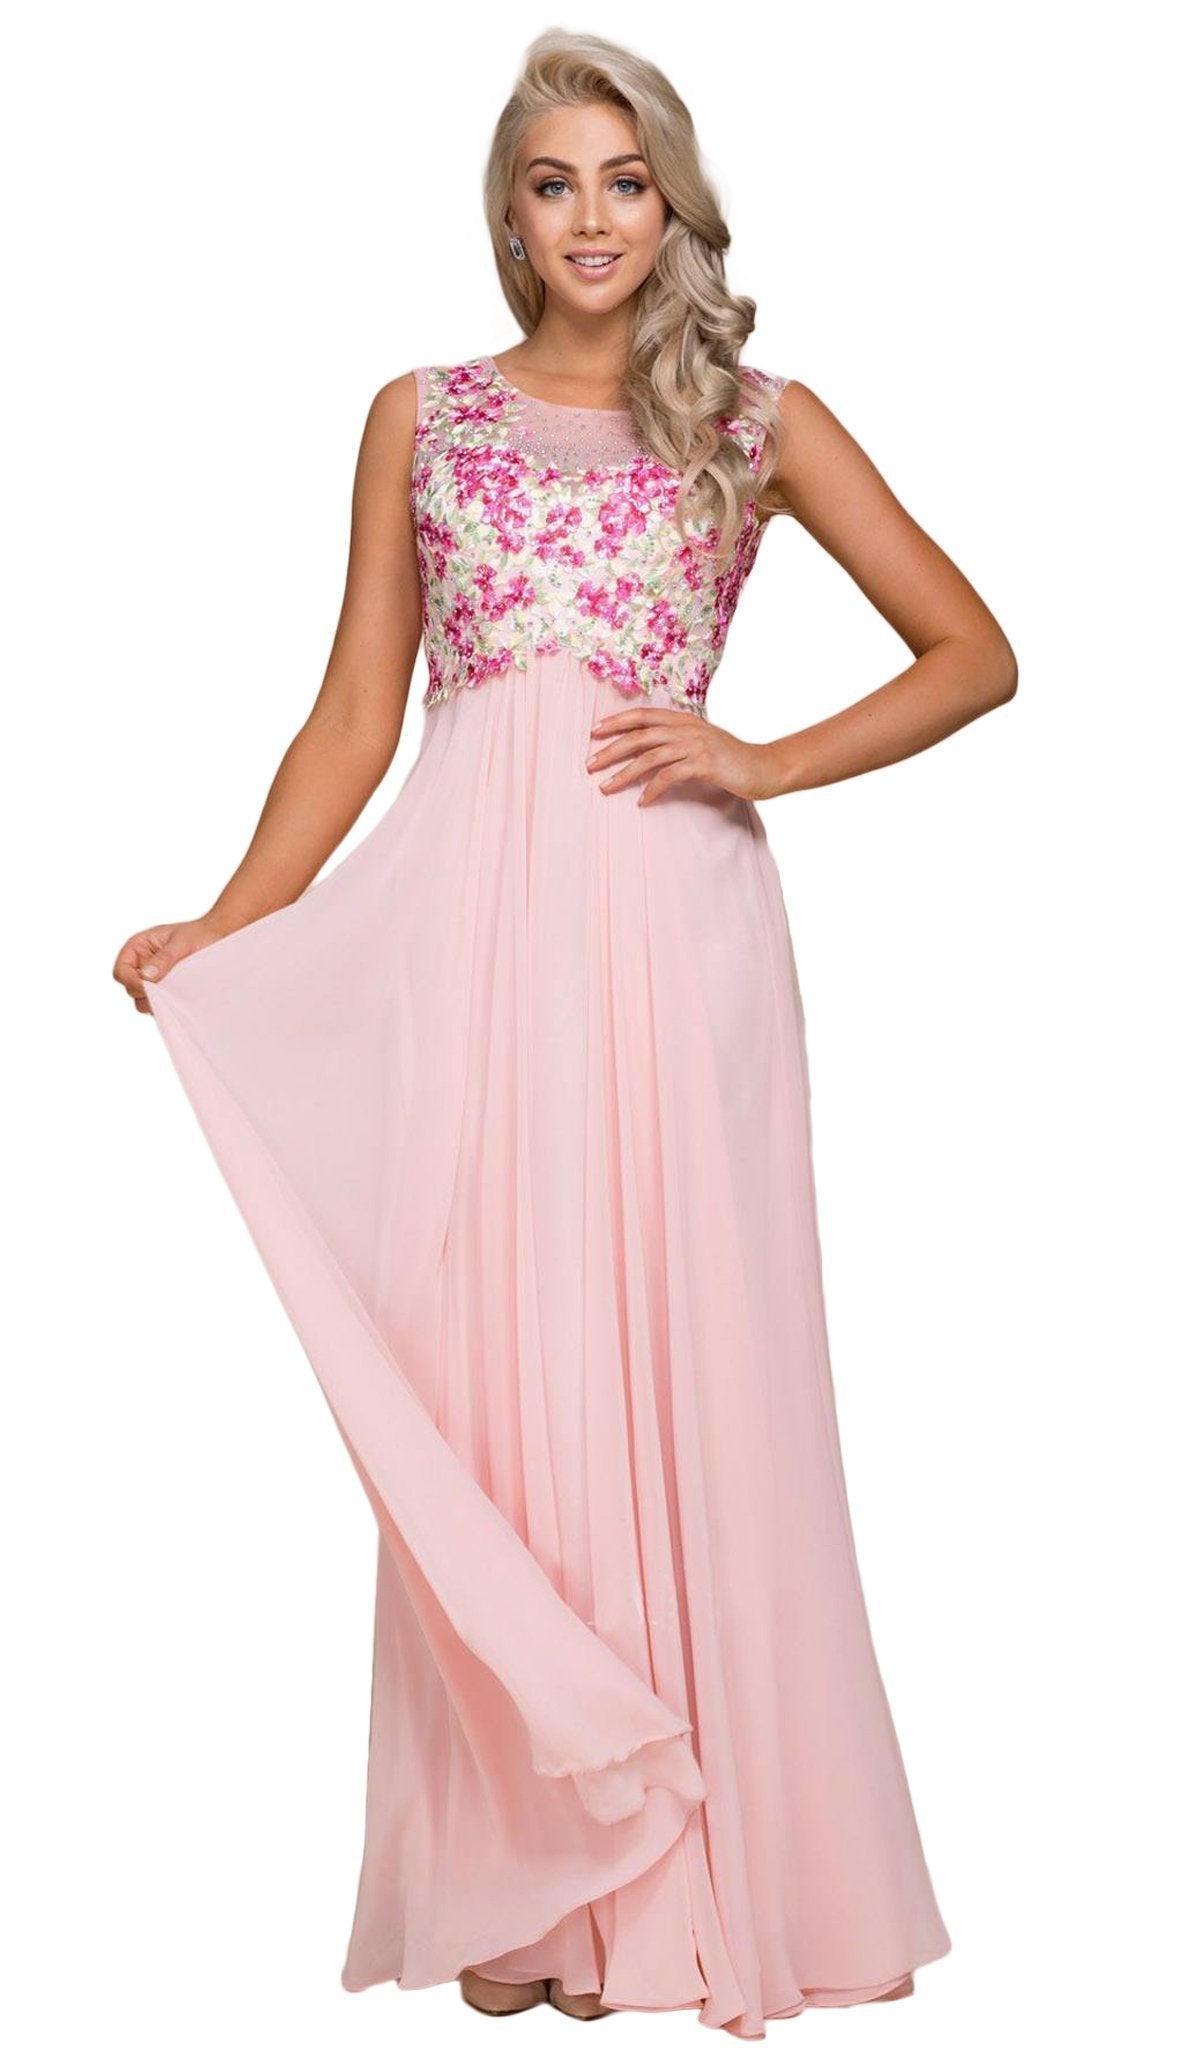 Nox Anabel - 8306 Floral Applique Illusion Bateau A-line Dress Special Occasion Dress XS / Bashful Pink